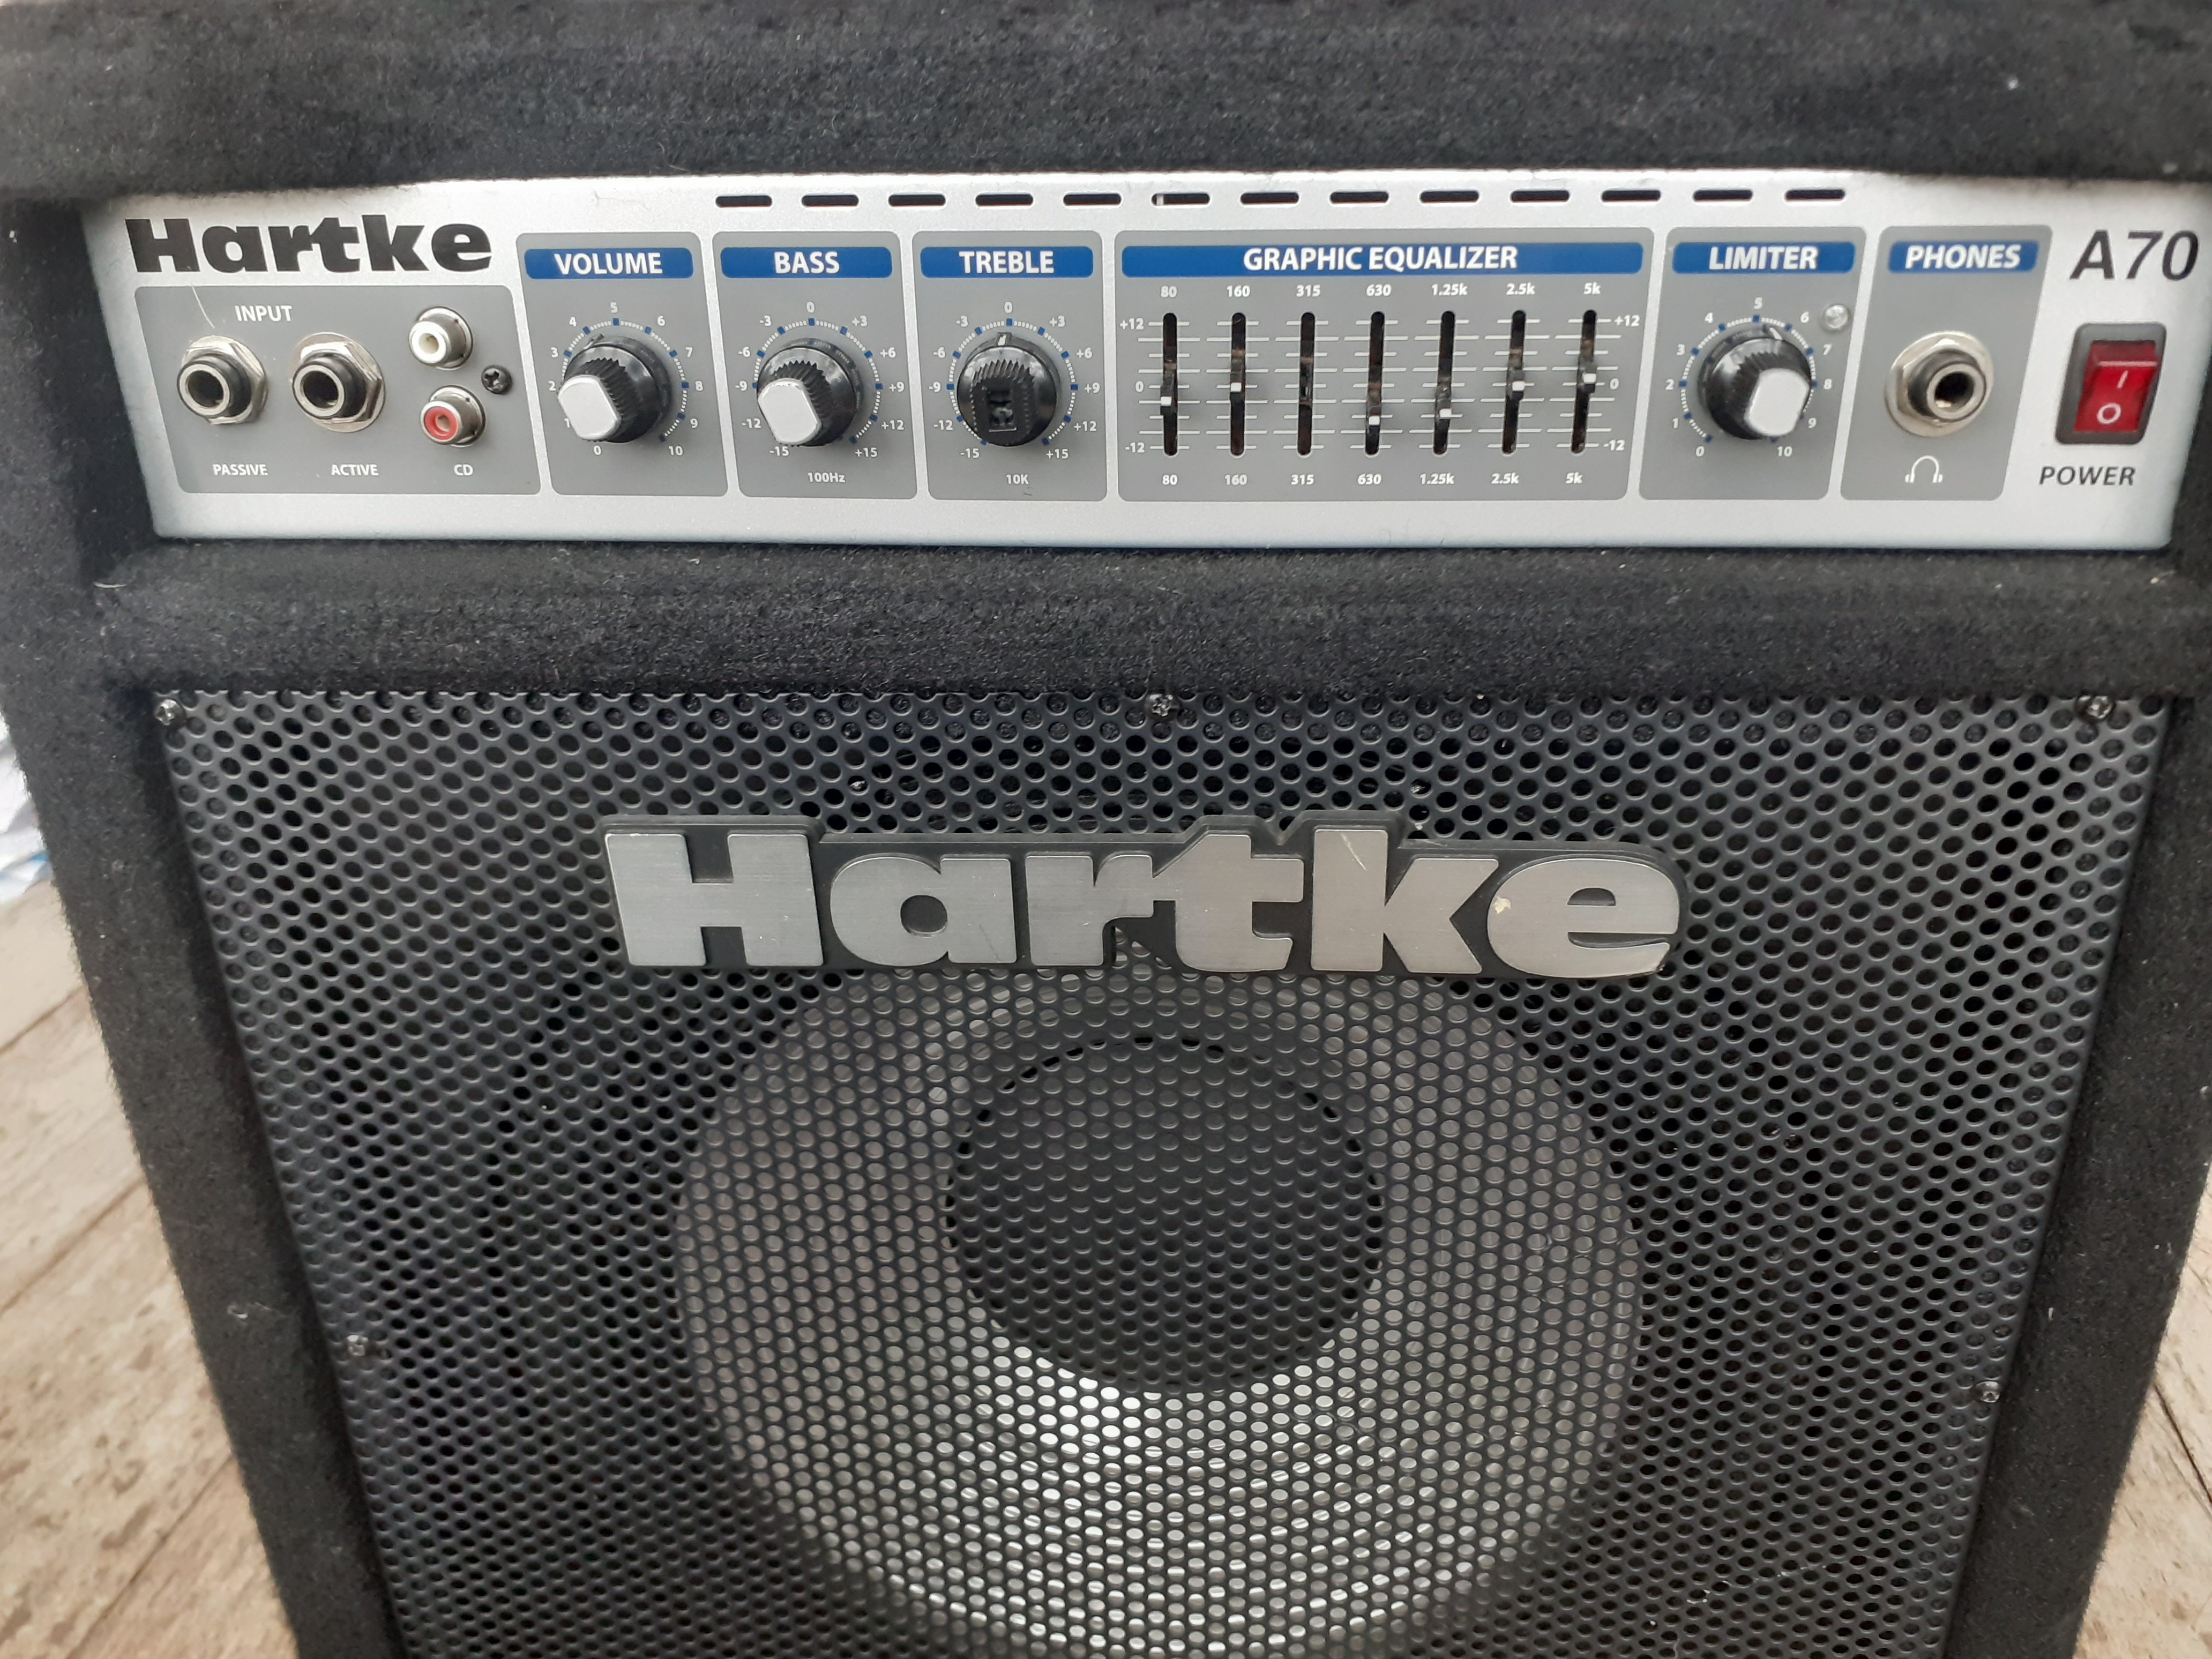 A70 - Hartke A70 - Audiofanzine